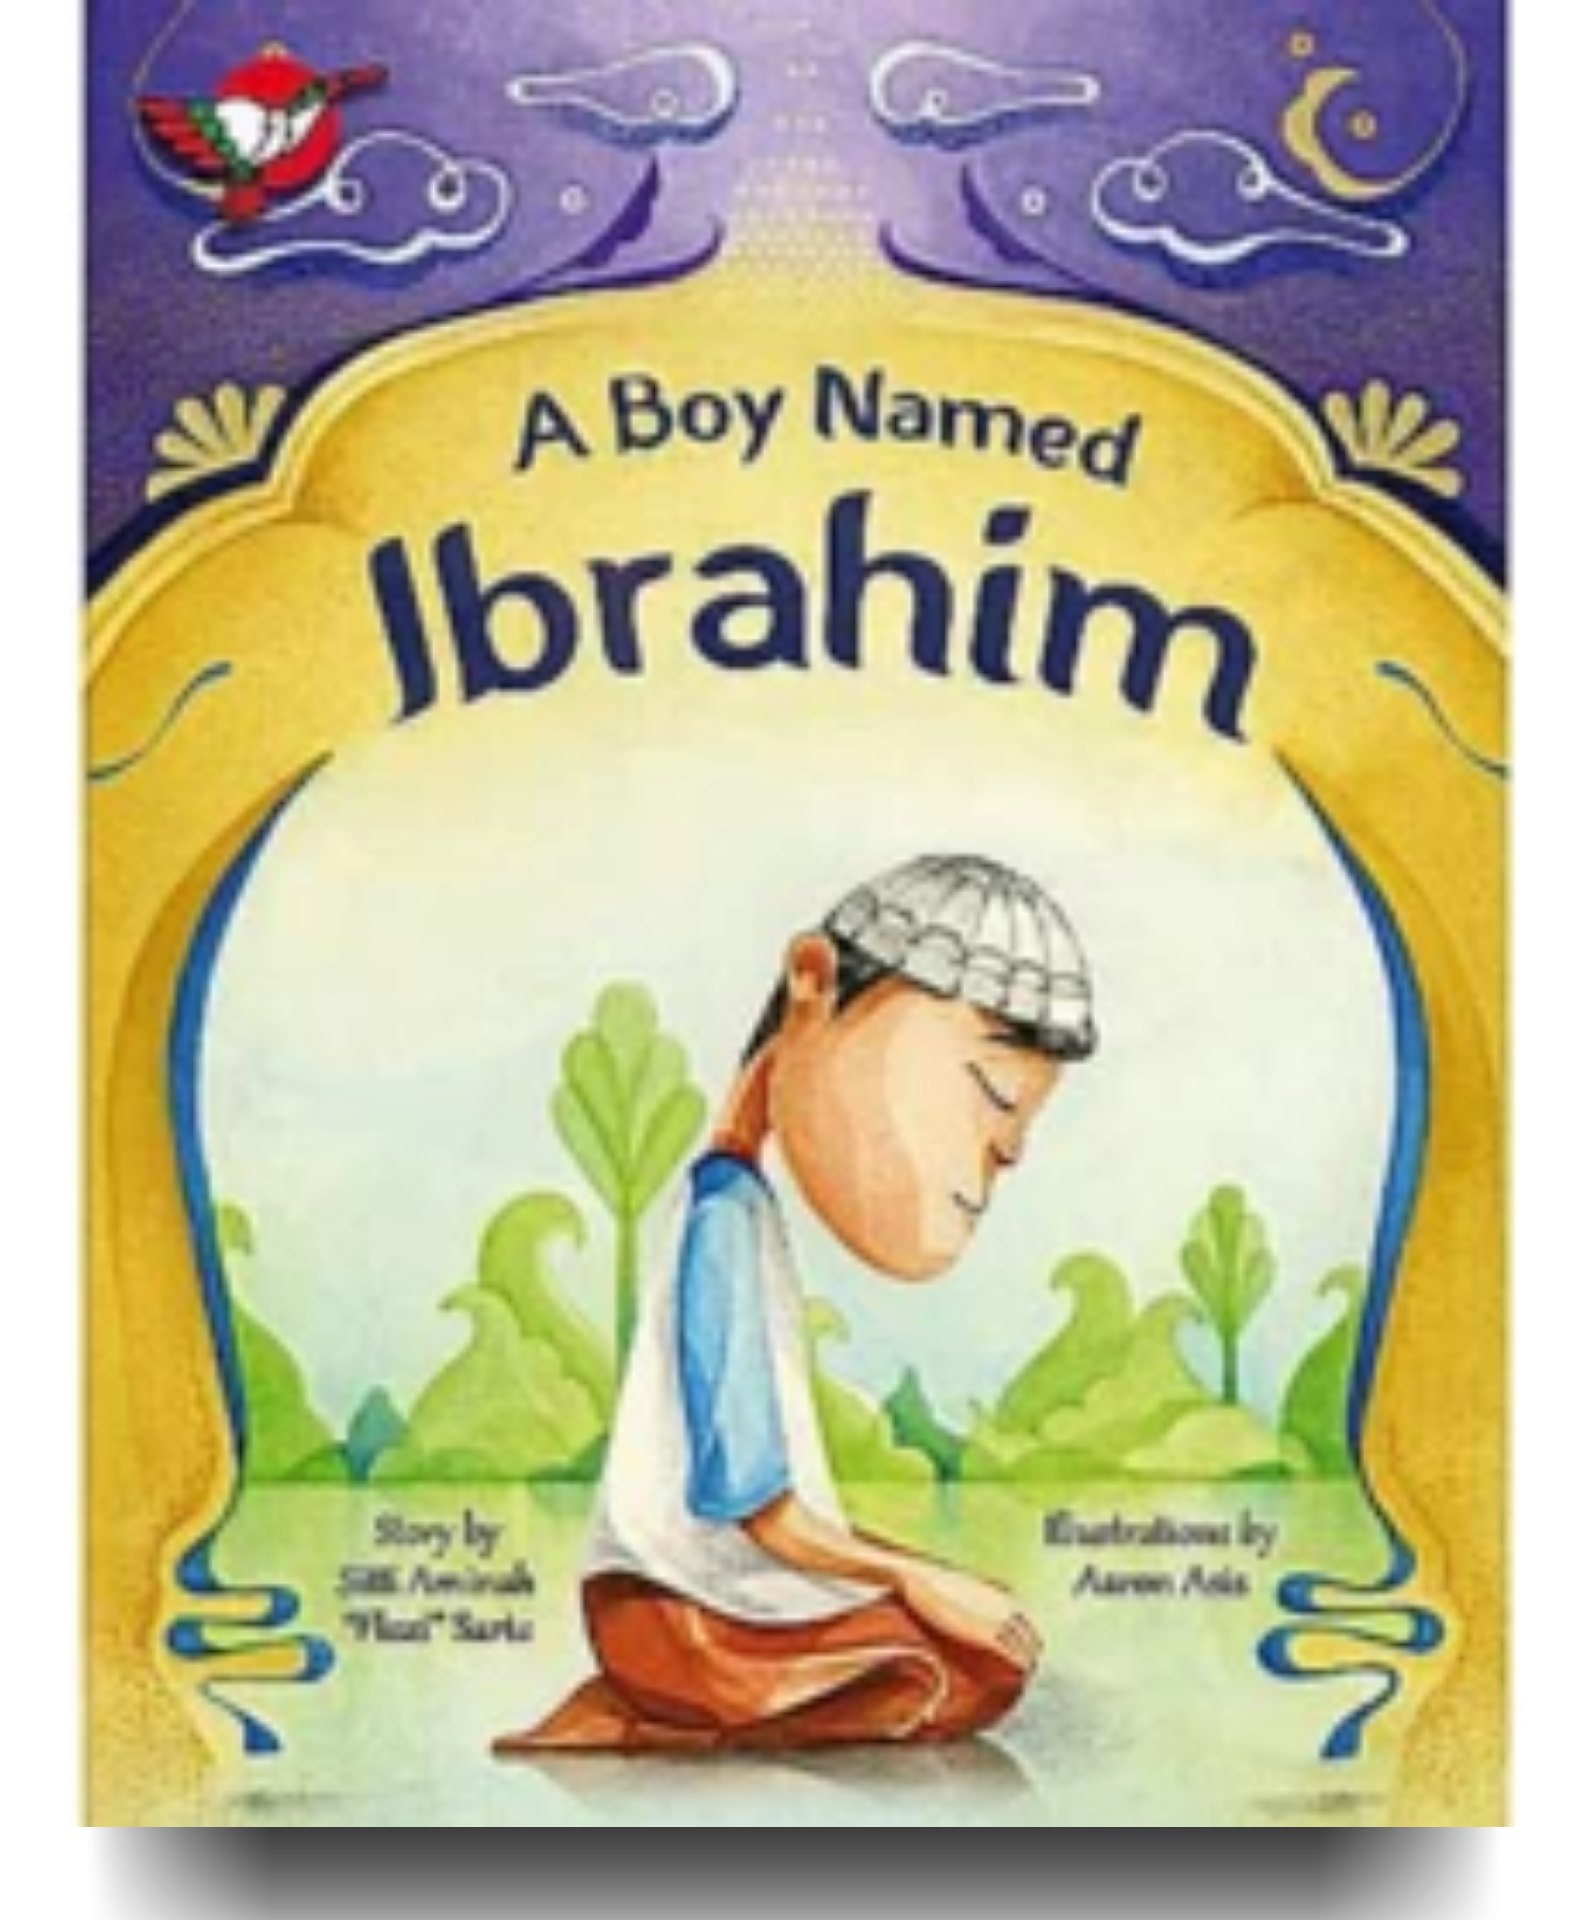 A Boy Named Ibrahim